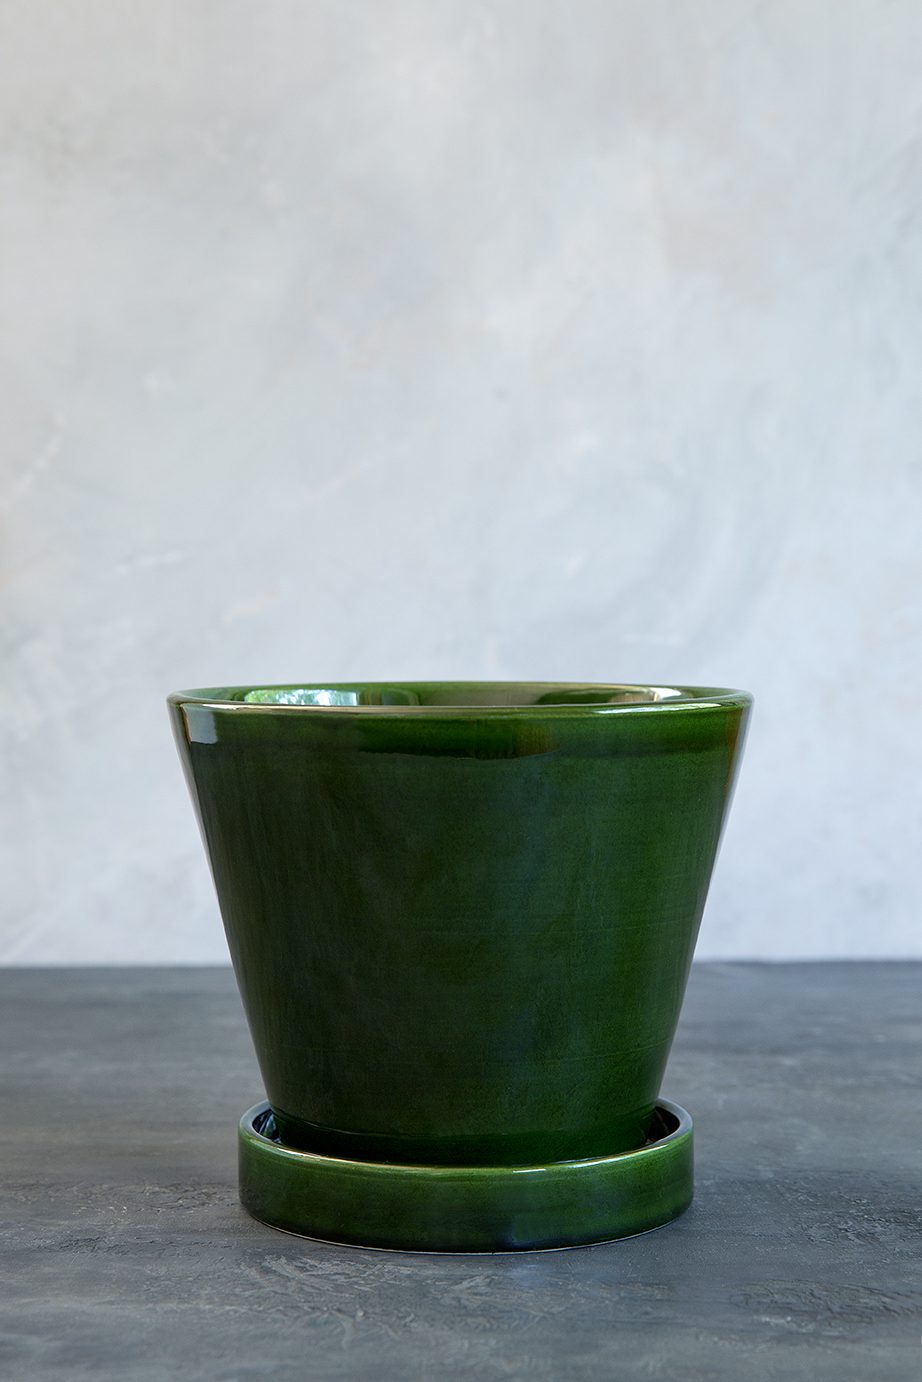 Empty glazed emerald green pot.